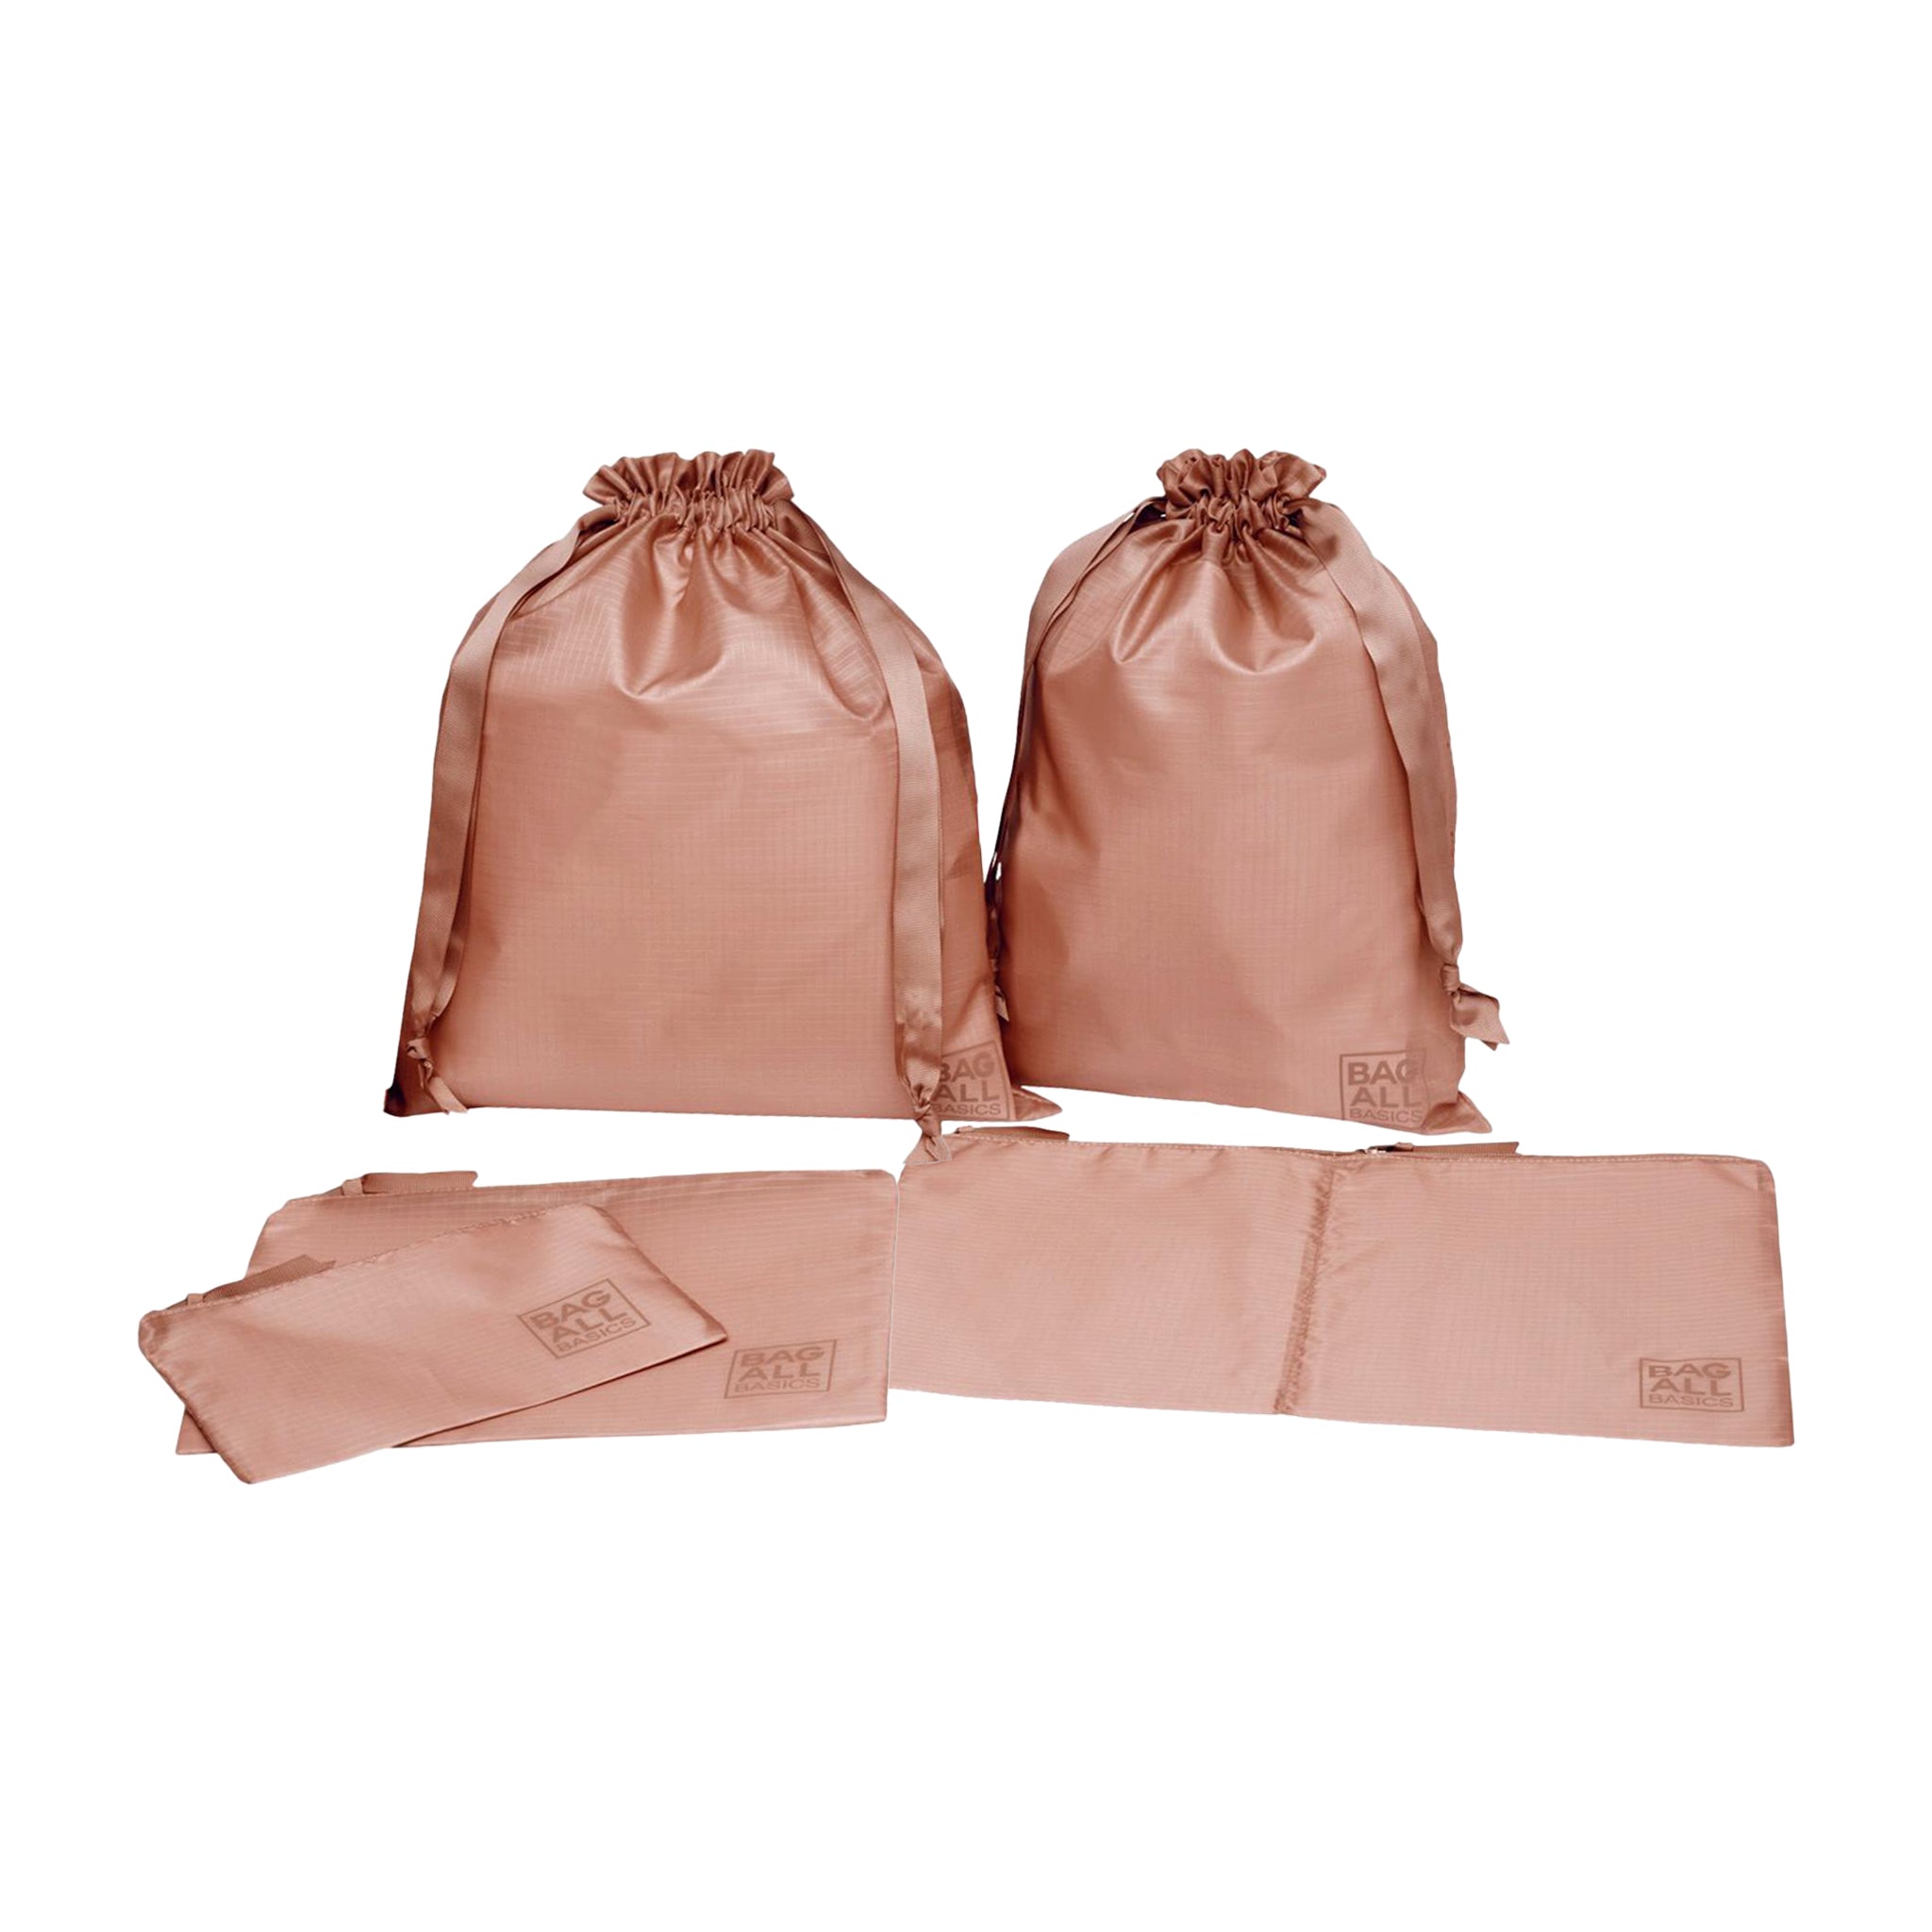 Bag-all Basic Packing Bags Set, 5-pack, Pink/Blush